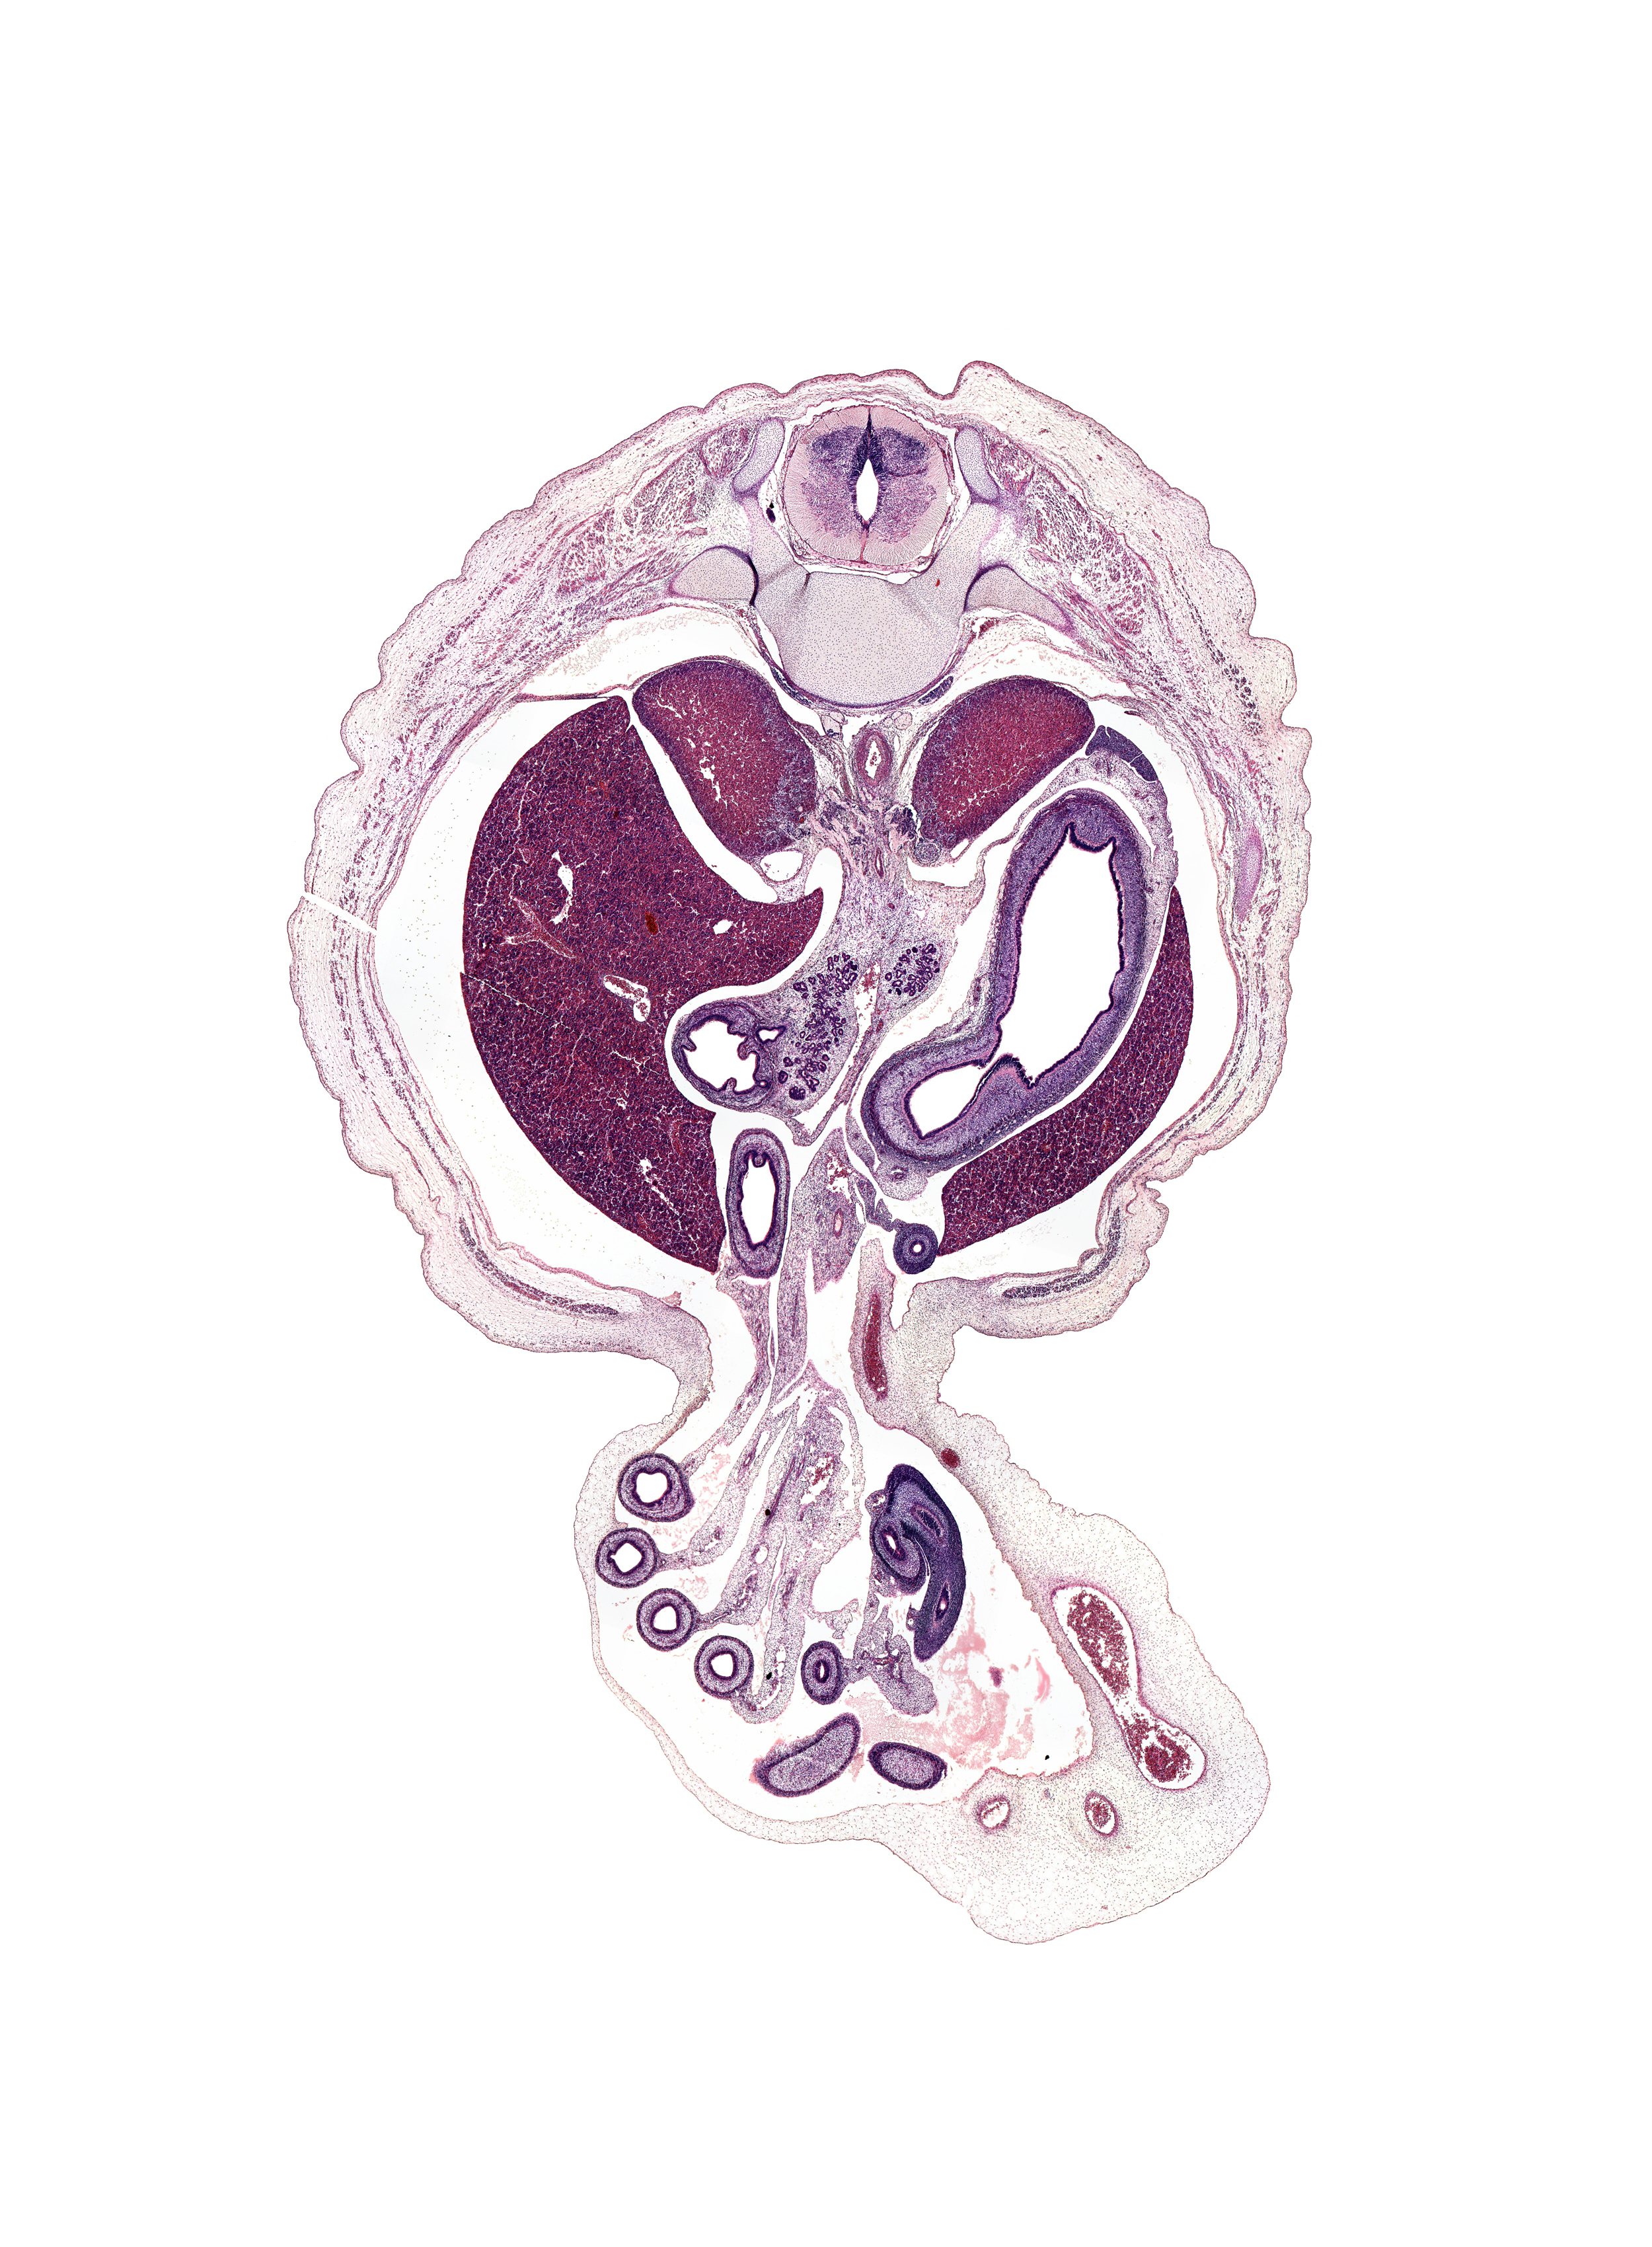 T-11 / T-12 interganglion region, allantois, aorta, appendix, artifact tear, body of stomach, celiac ganglion, distal limb of herniated midgut, duodenum (second part), hindgut, inferior vena cava, junction of common bile duct and duodenum, left umbilical artery, lesser sac (omental bursa), origin of celiac artery, proximal limb of herniated midgut, pyloric antrum of stomach, rib 12, right umbilical artery, spleen, superior mesenteric vein, suprarenal gland medulla, umbilical vein